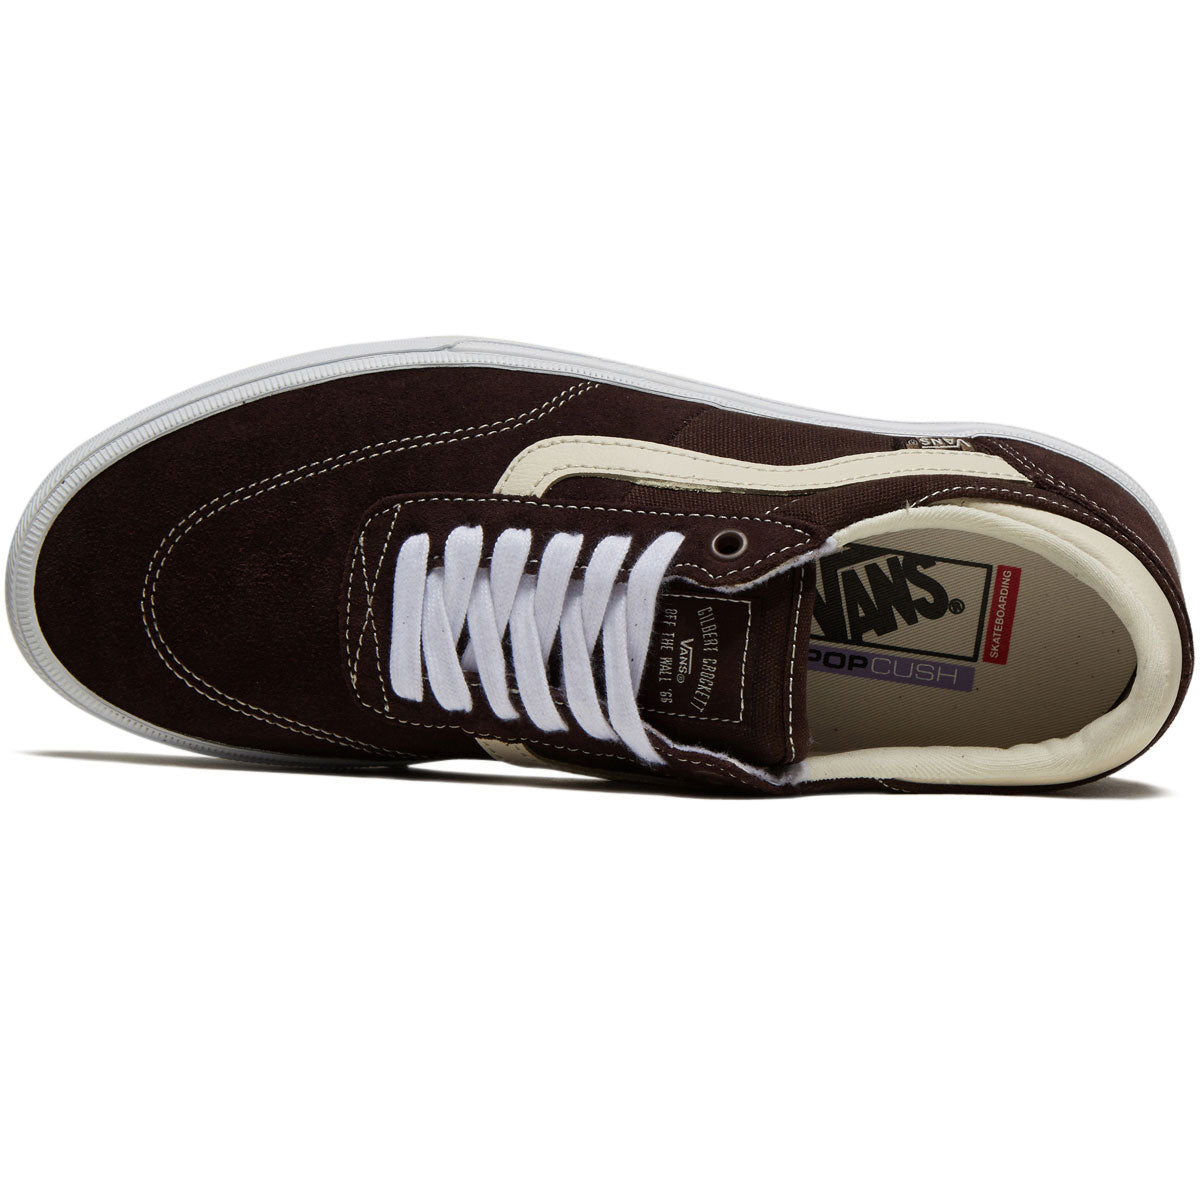 Vans Gilbert Crockett Shoes - Dark Brown image 3